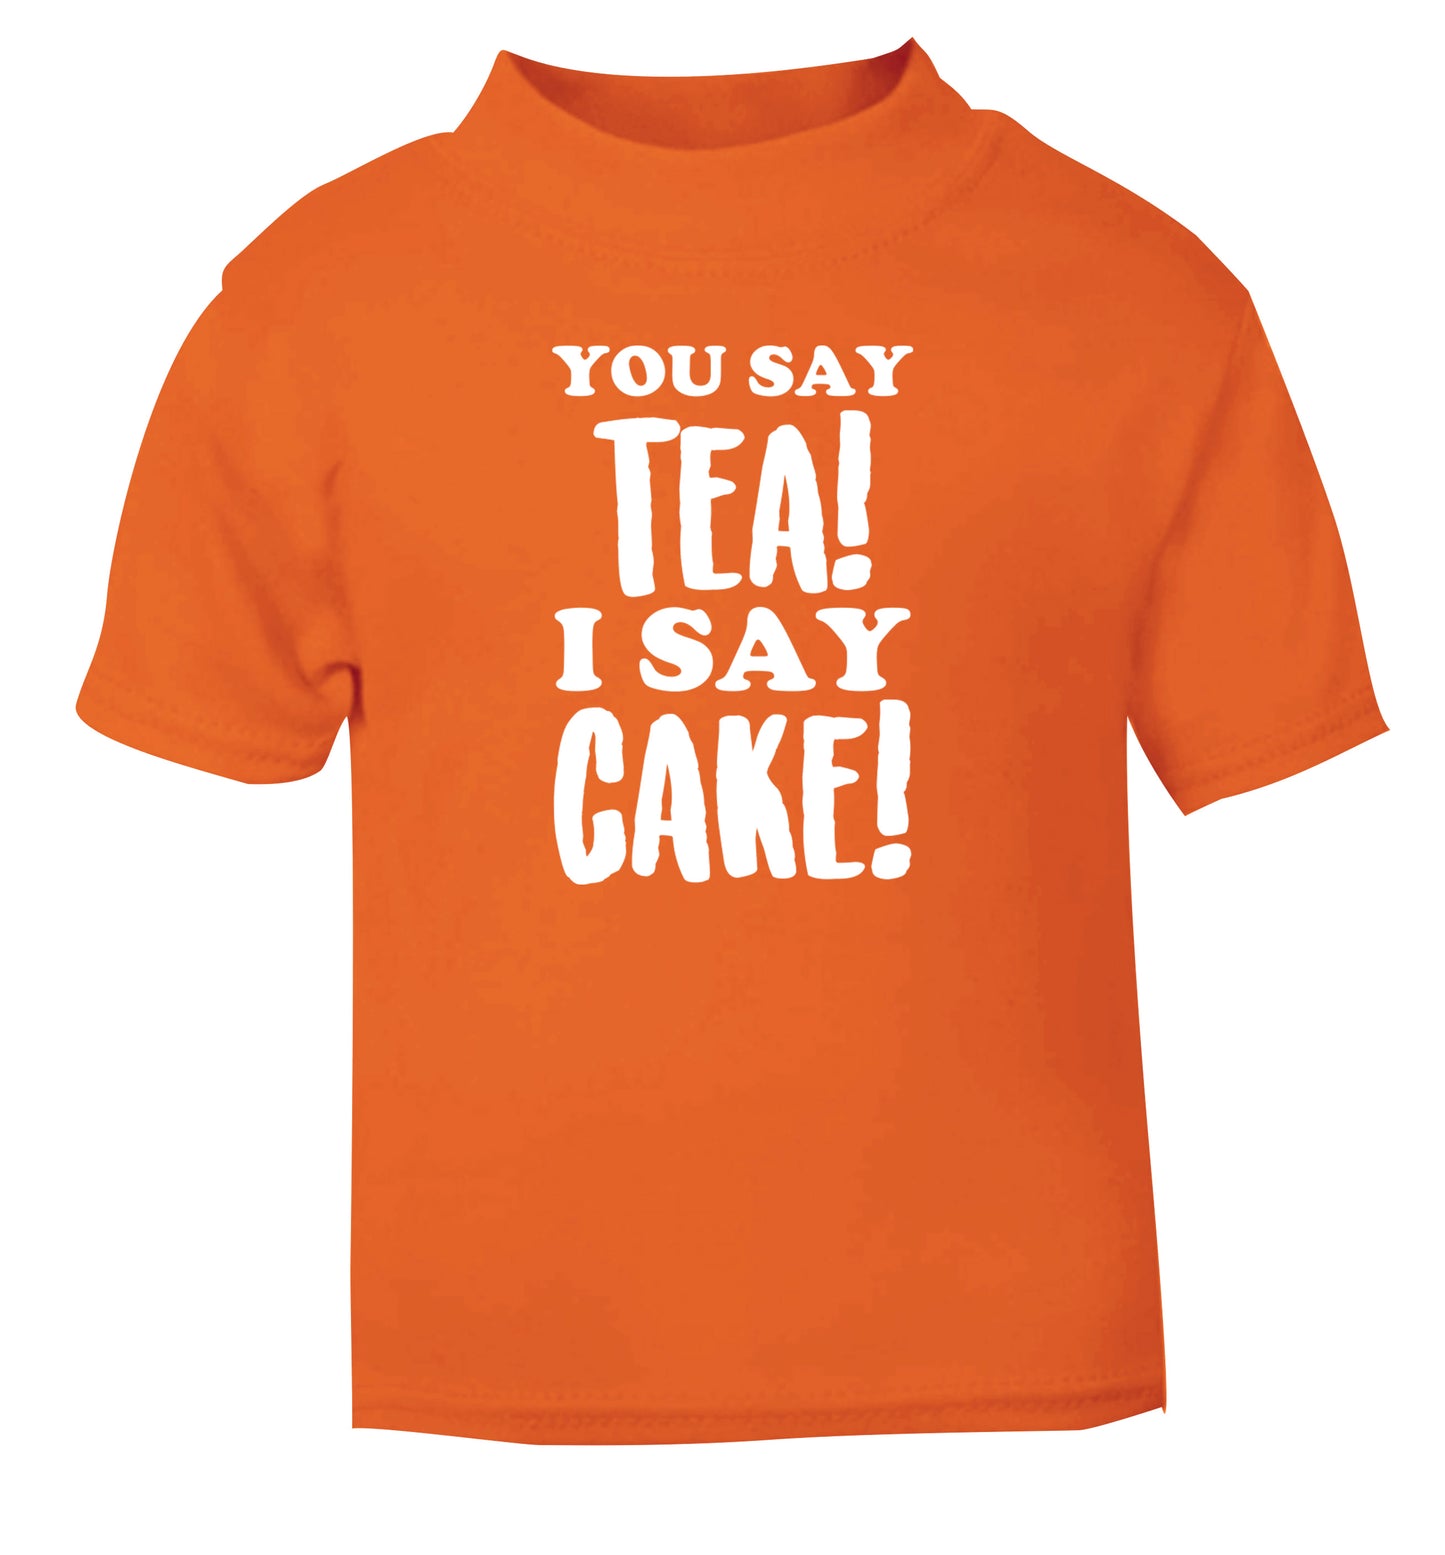 You say tea I say cake! orange Baby Toddler Tshirt 2 Years